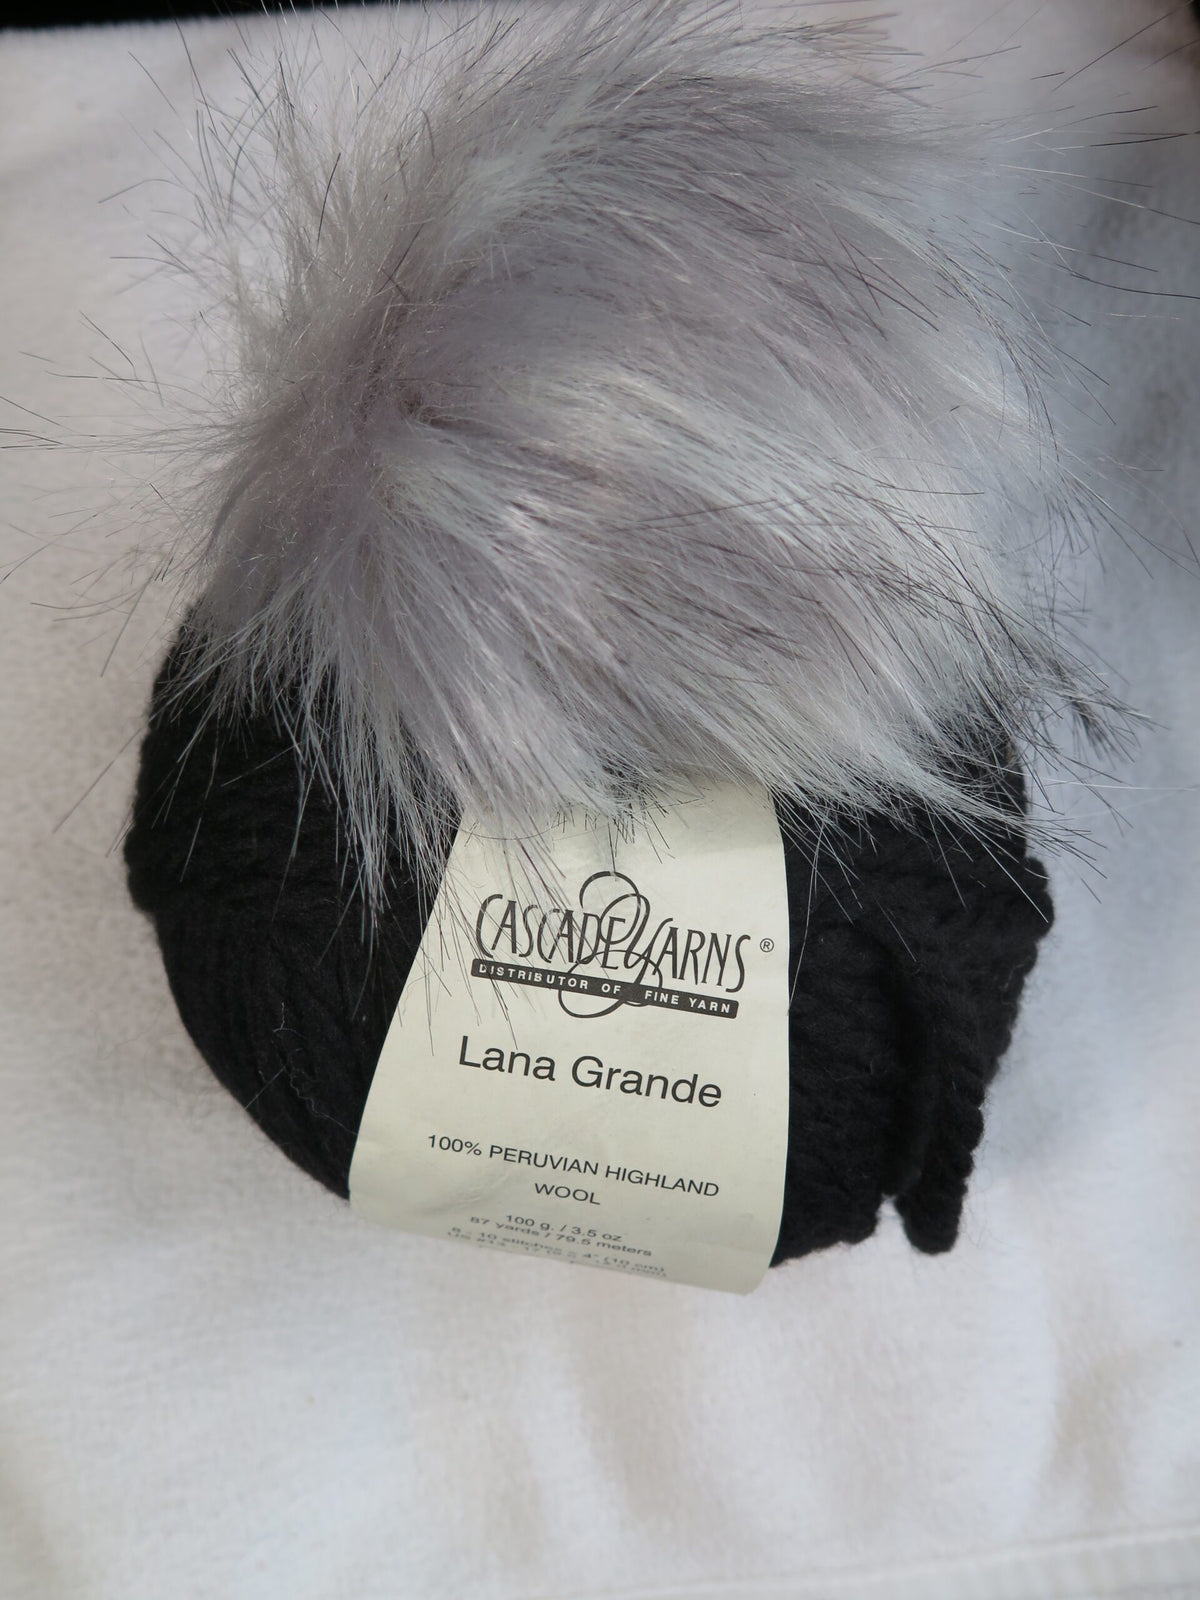 Cascade Yarns Lana Grande Hat Kit - Black and Silver